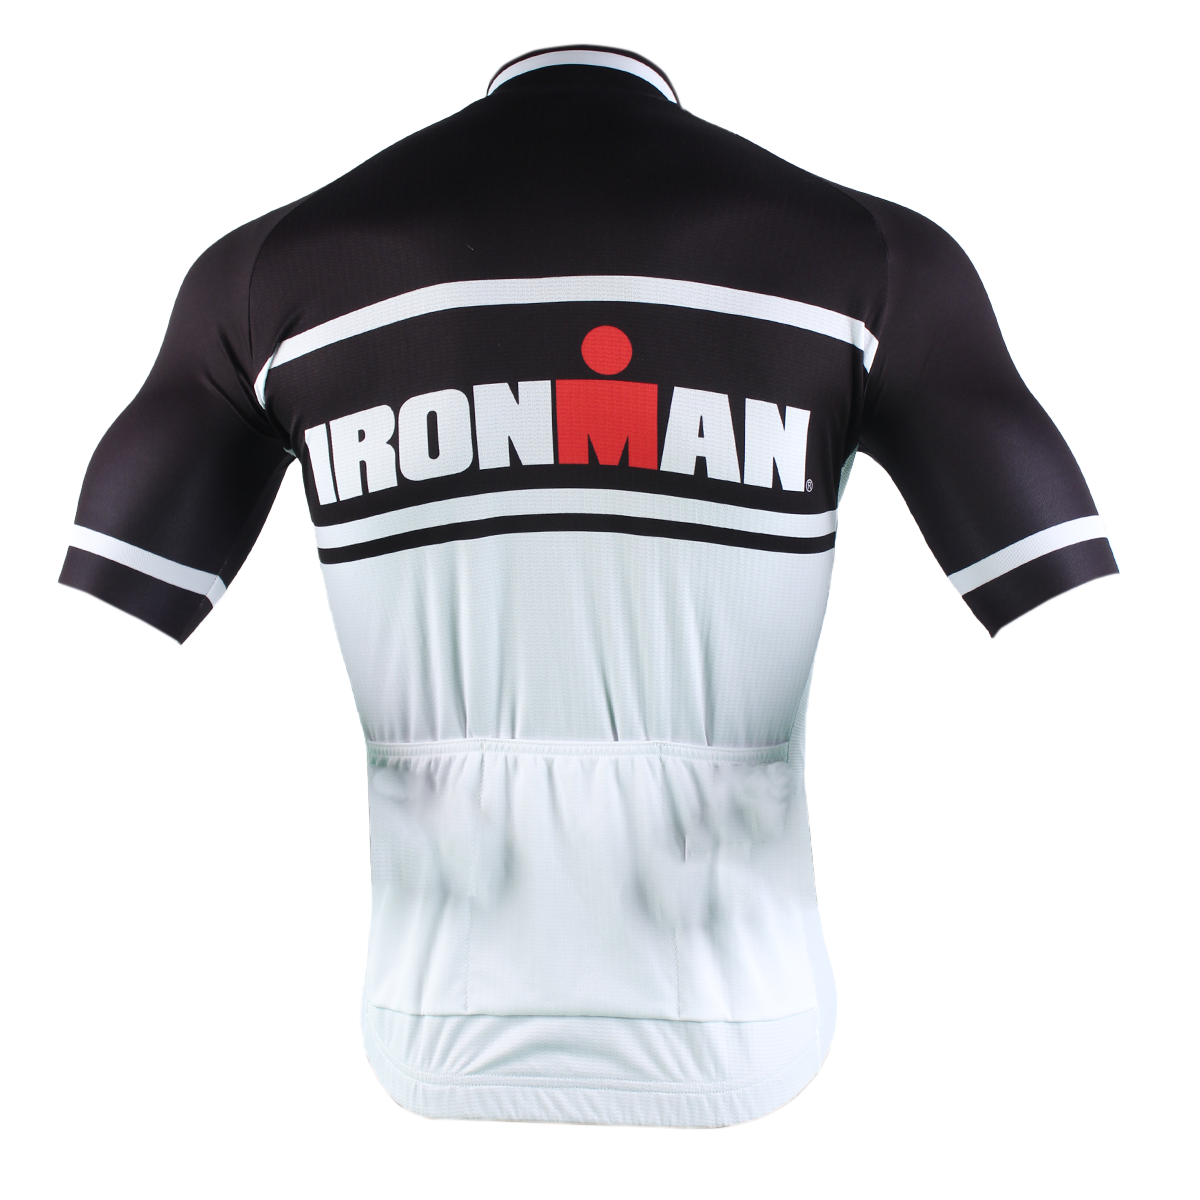 IRONMAN Santini Classic Men's Cycle Jersey - Black/White